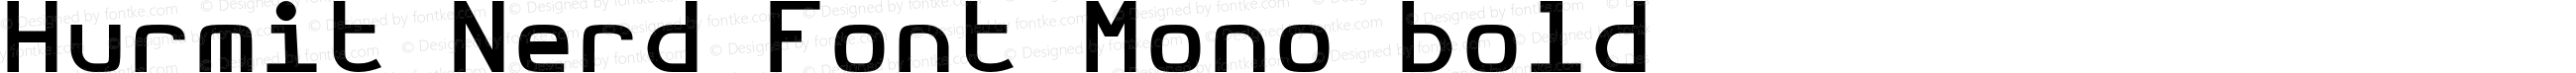 Hurmit Bold Nerd Font Complete Mono